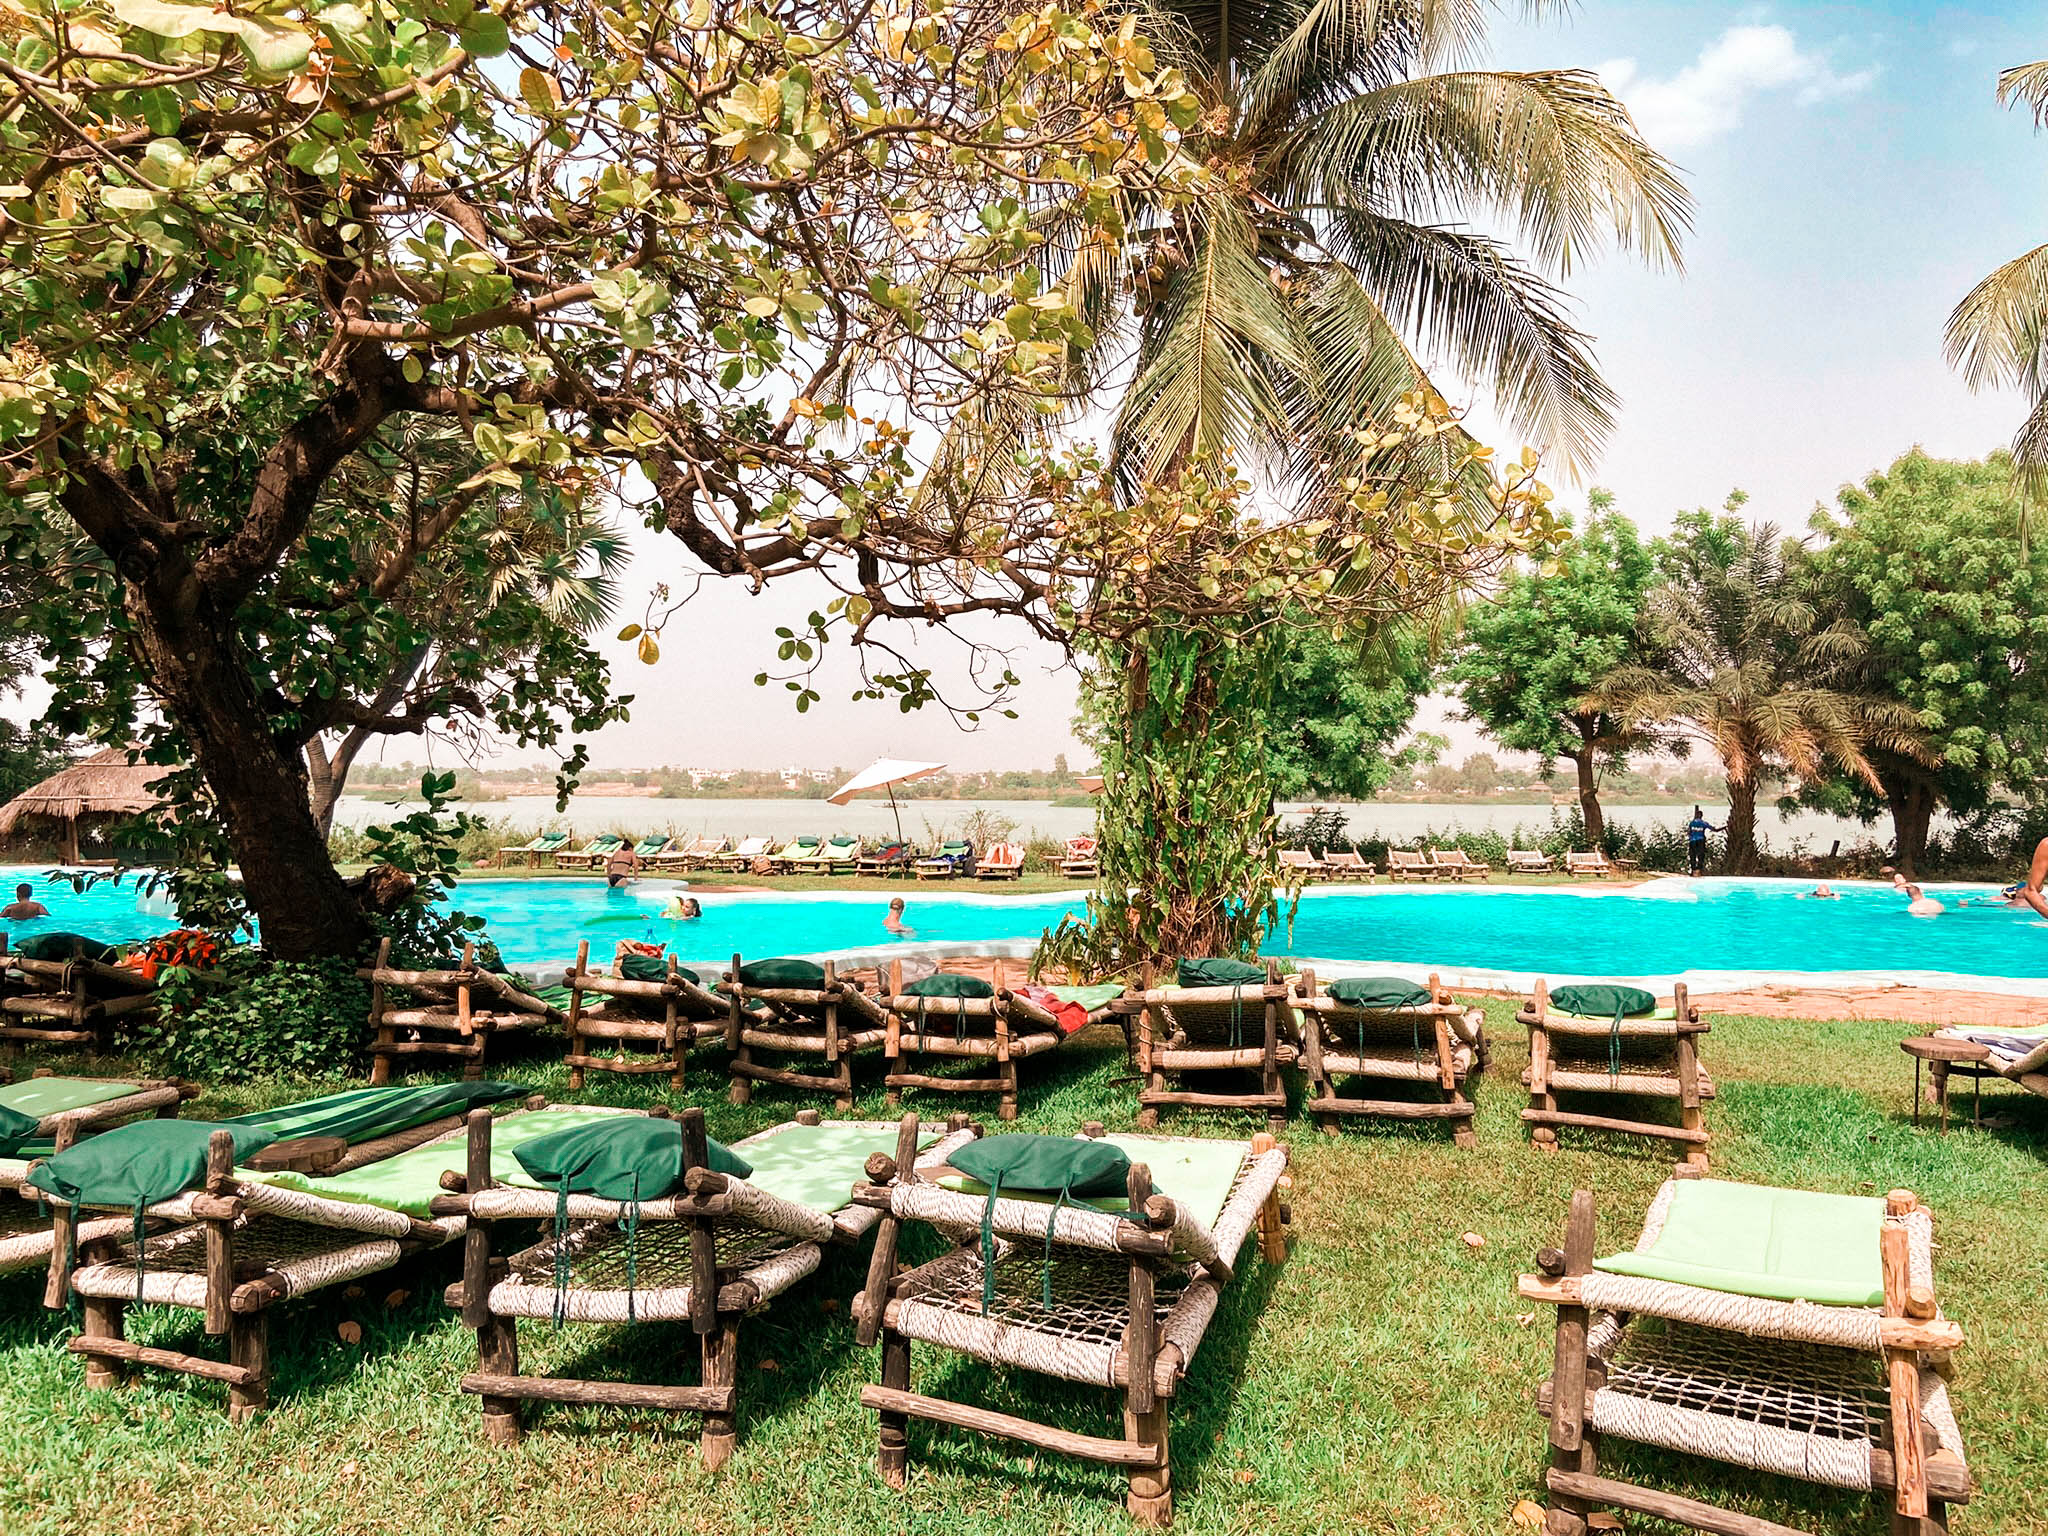 Badalodge Bamako : Piscine avec vue sur le fleuve, Restaurant, hôtel